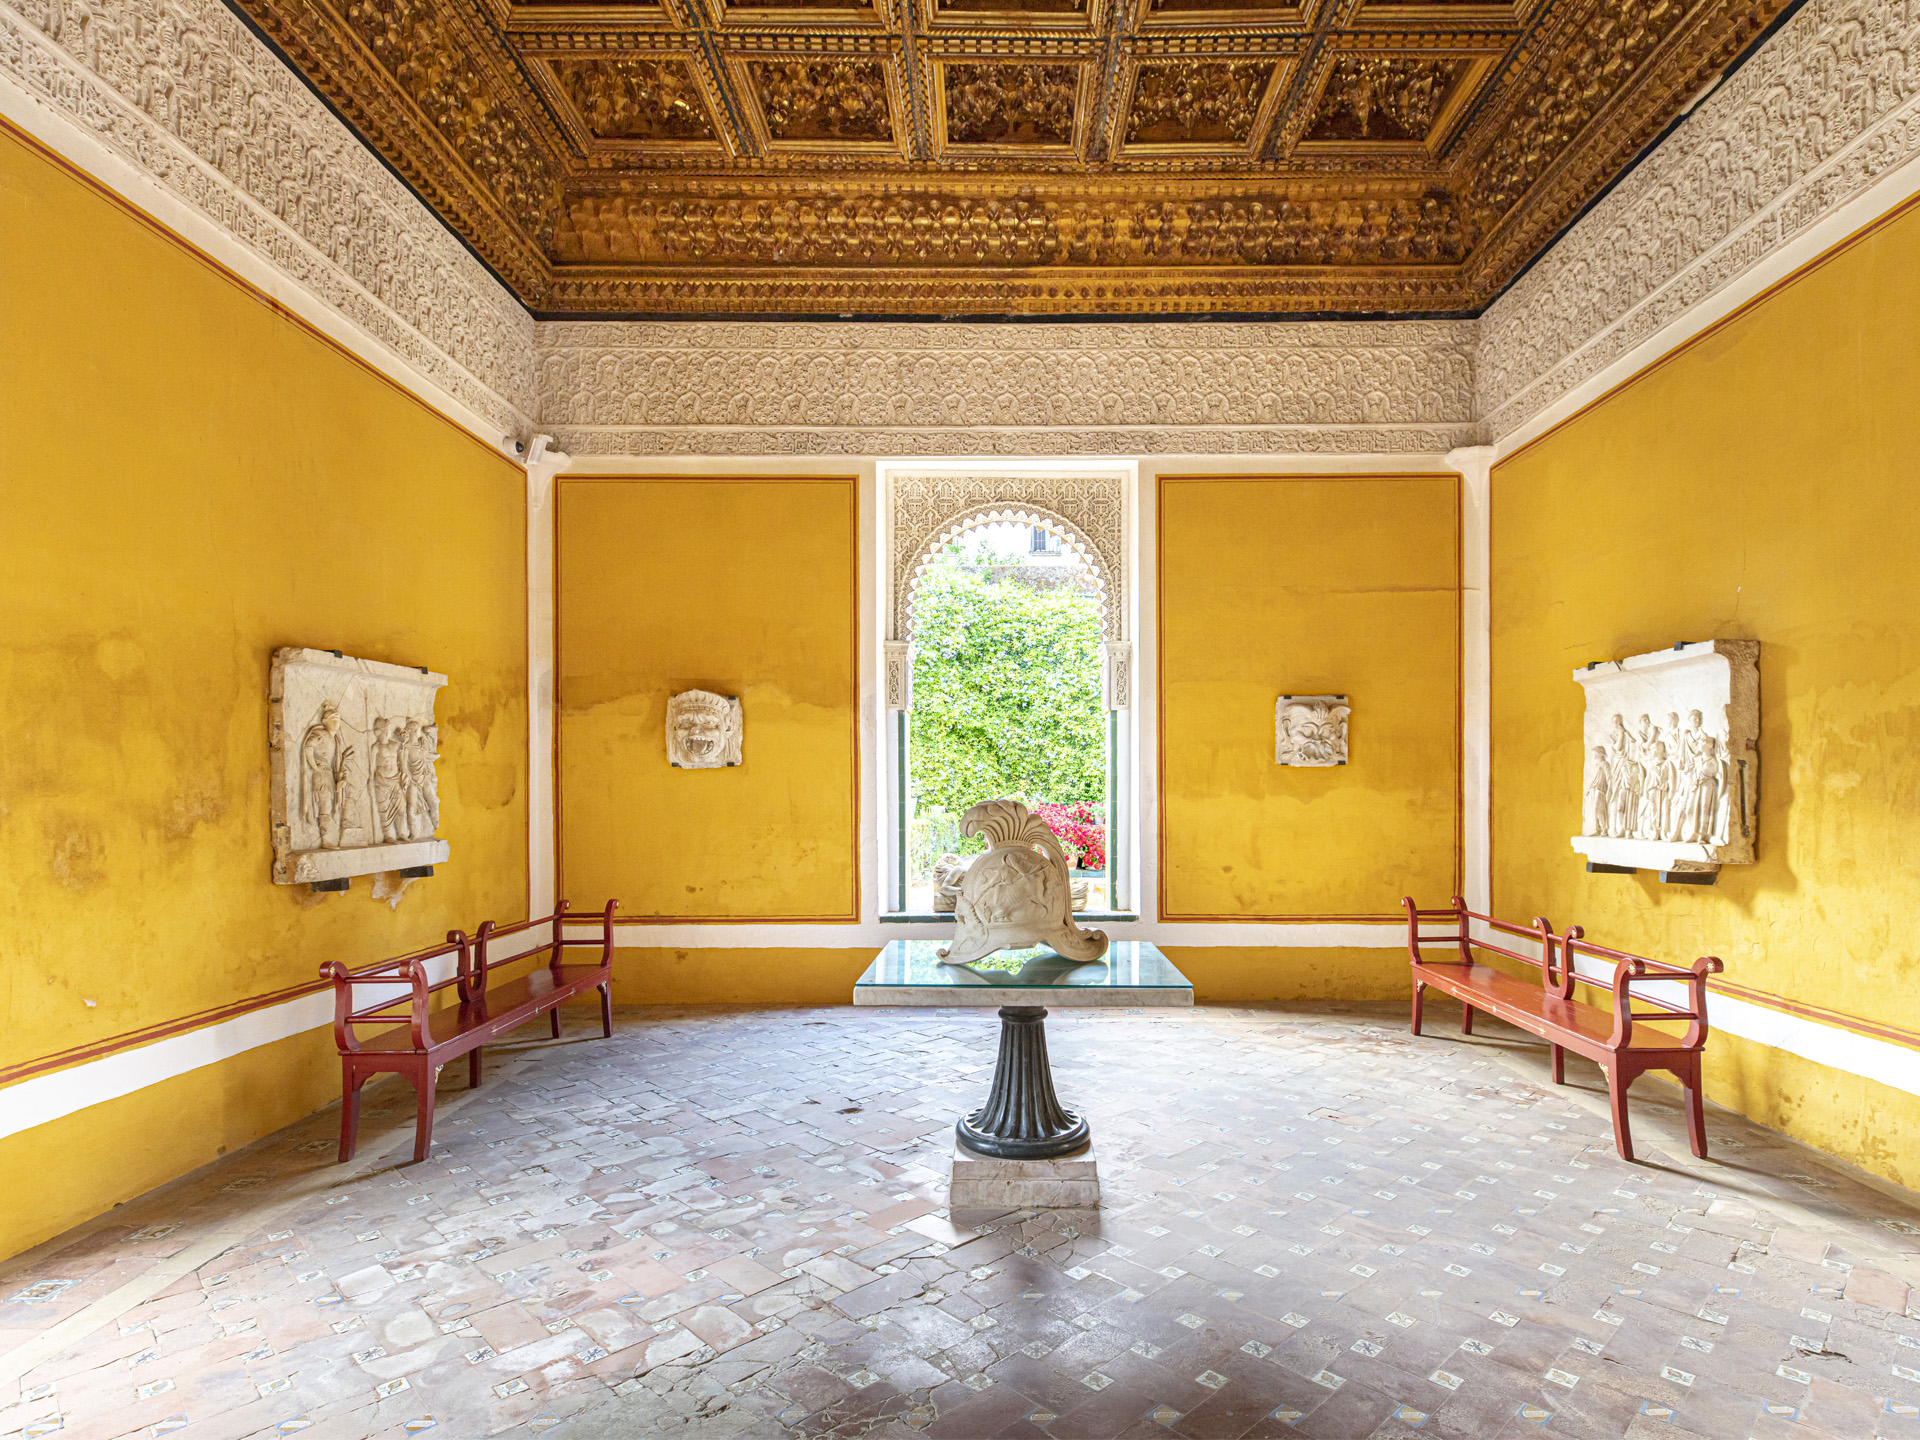 Camera d'oro, Casa de Pilatos. Siviglia ©Celia Rogge